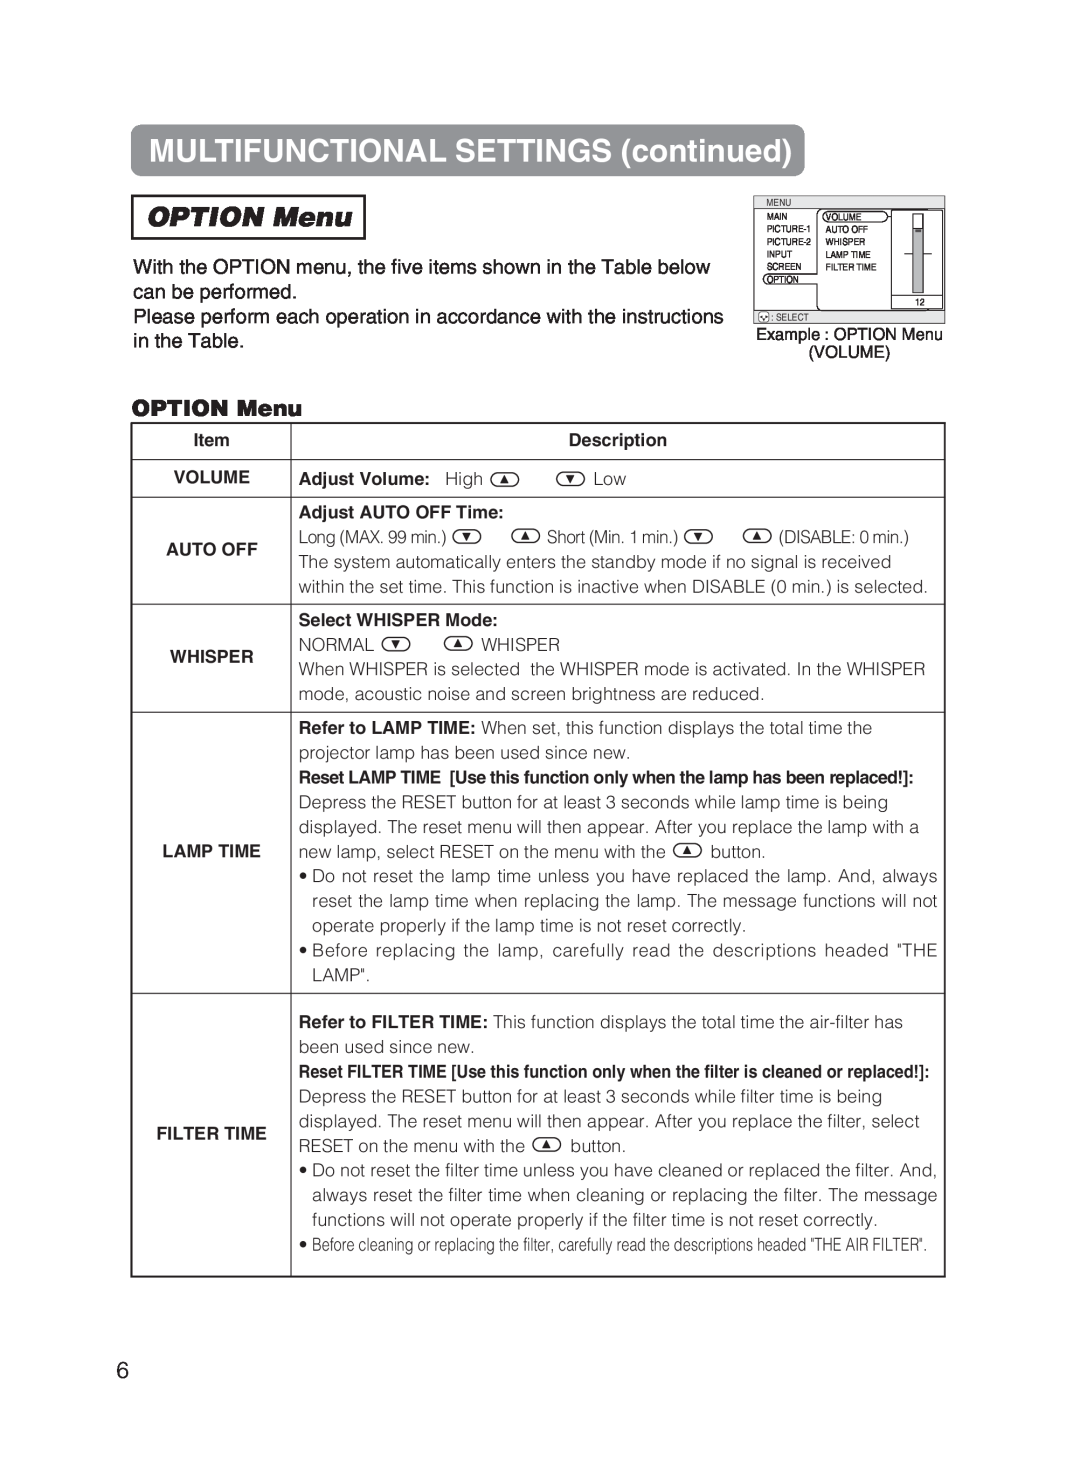 Dukane 8755B user manual OPTION Menu, MULTIFUNCTIONAL SETTINGS continued 